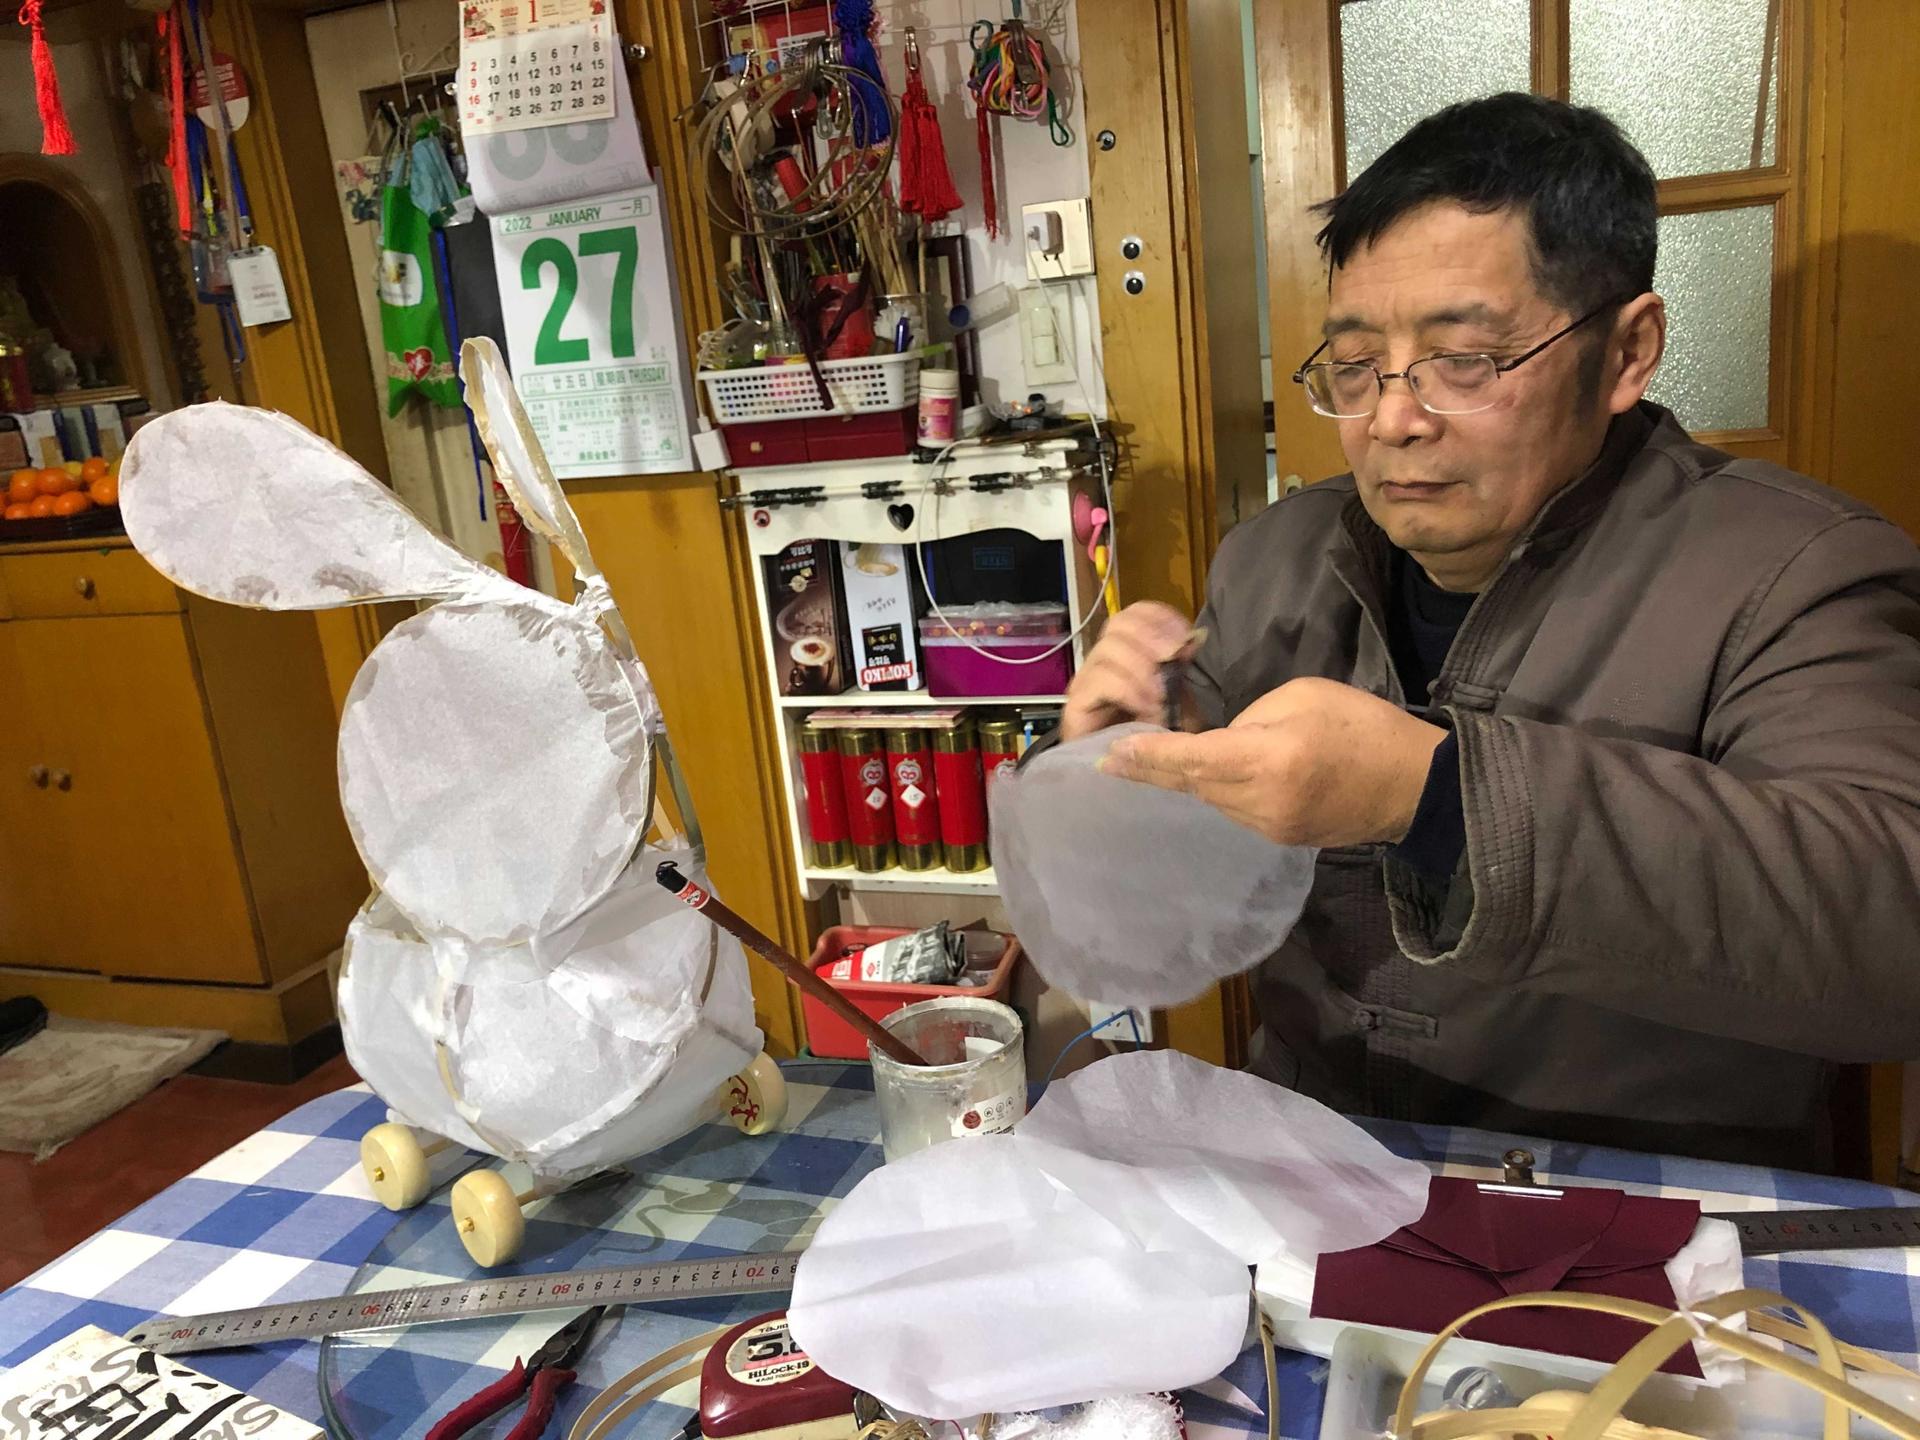 Li Jianguo making a rabbit lantern in his home workshop.